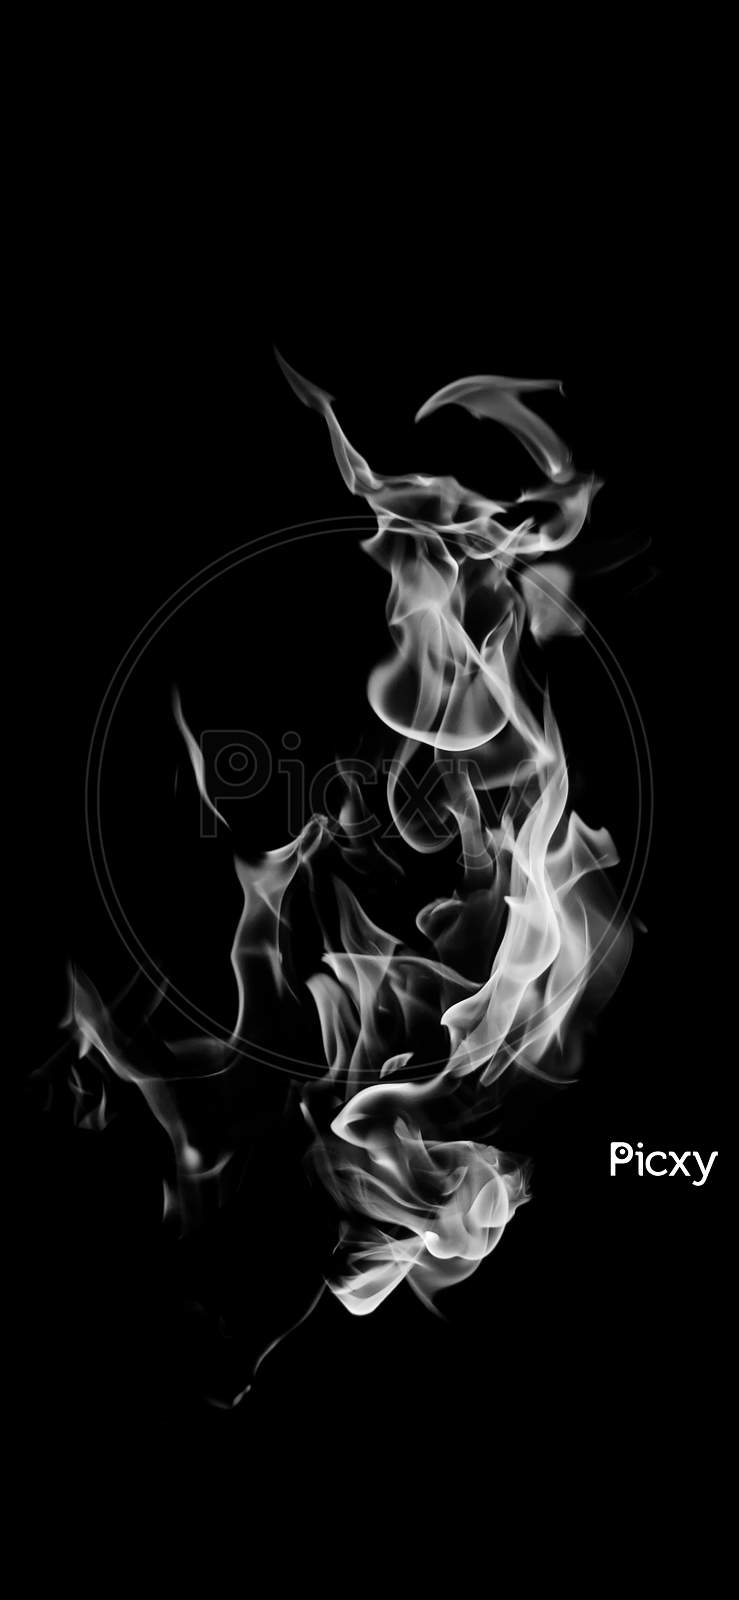 smoke of rising flames